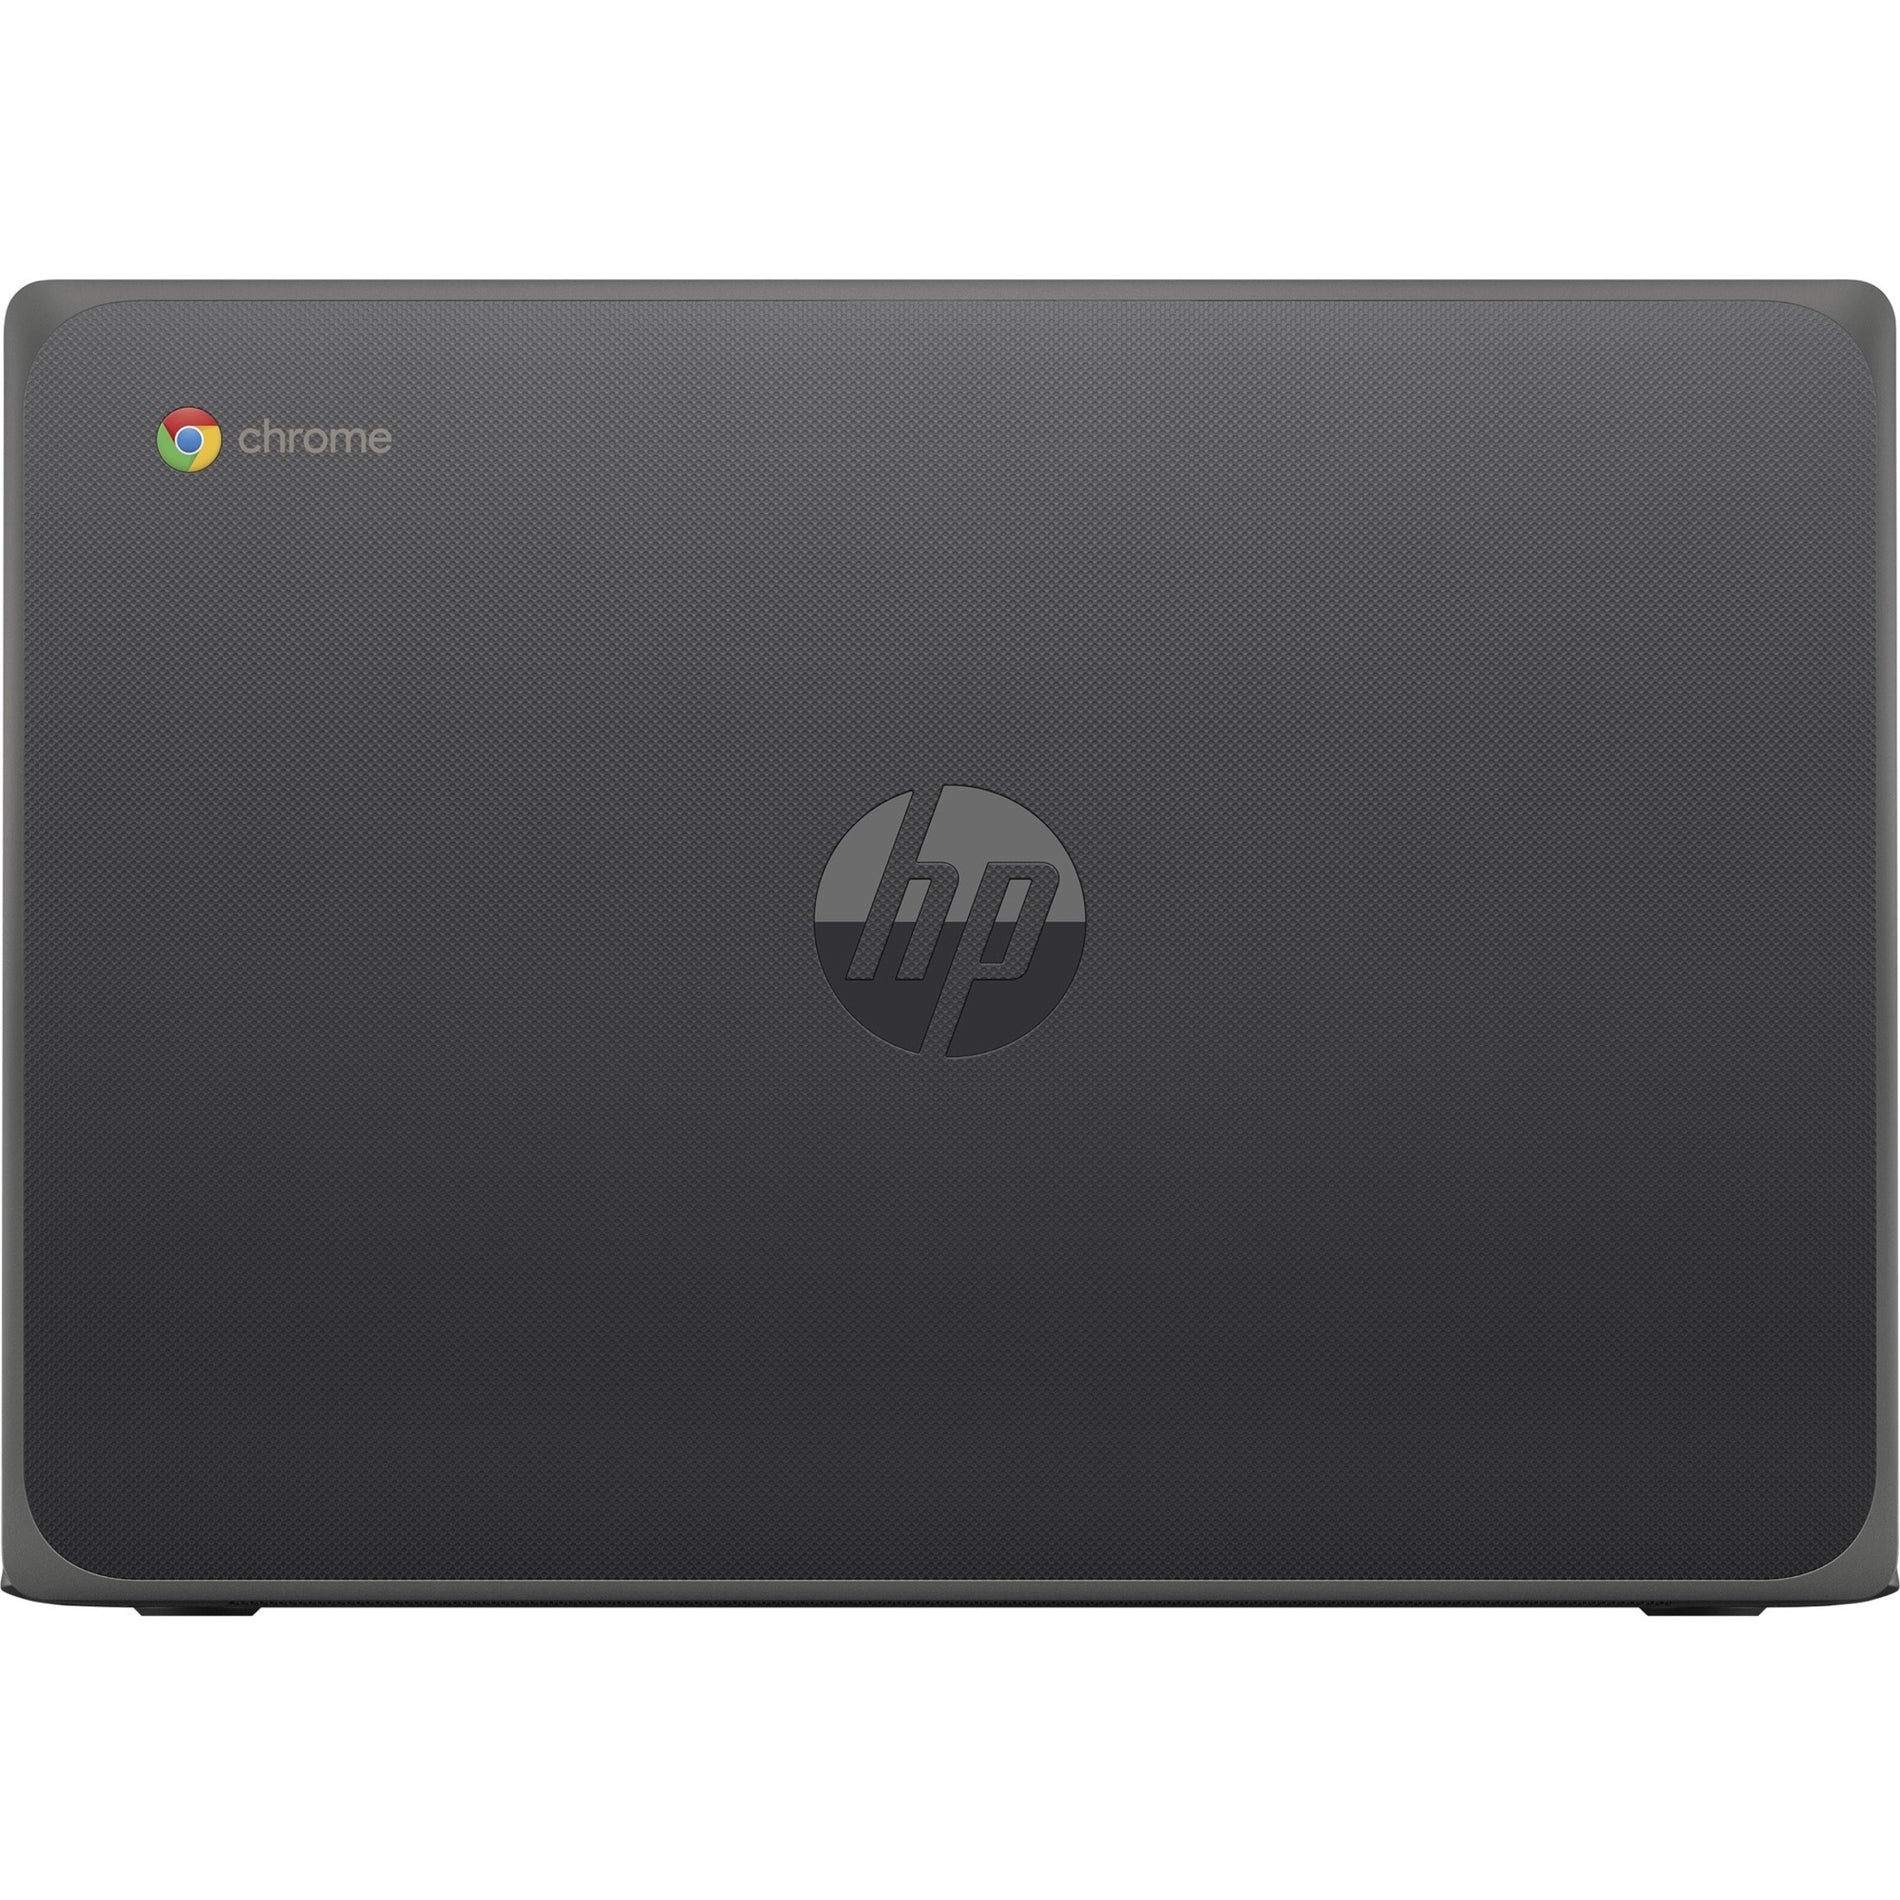 HPI SOURCING - NEW 436C7UT Chromebook 11A G8 EE 11.6" Chromebook, HD, AMD A4-9120C Dual-core, 4GB RAM, 32GB Flash Memory, Chalkboard Gray